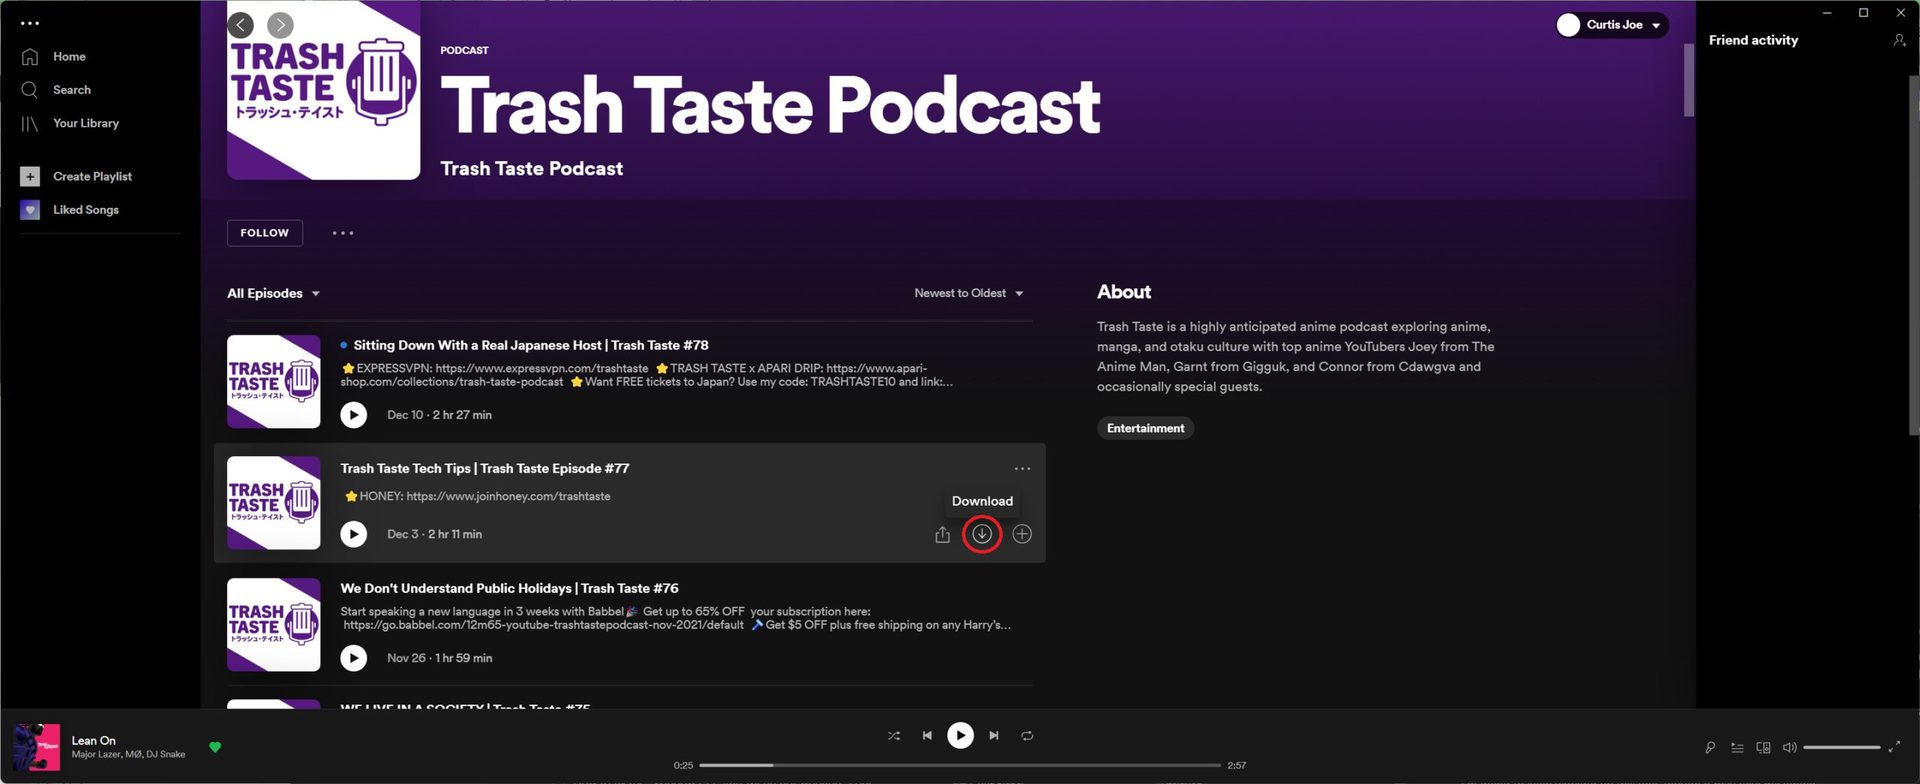 The Trash Taste podcast as demonstrated on desktop.